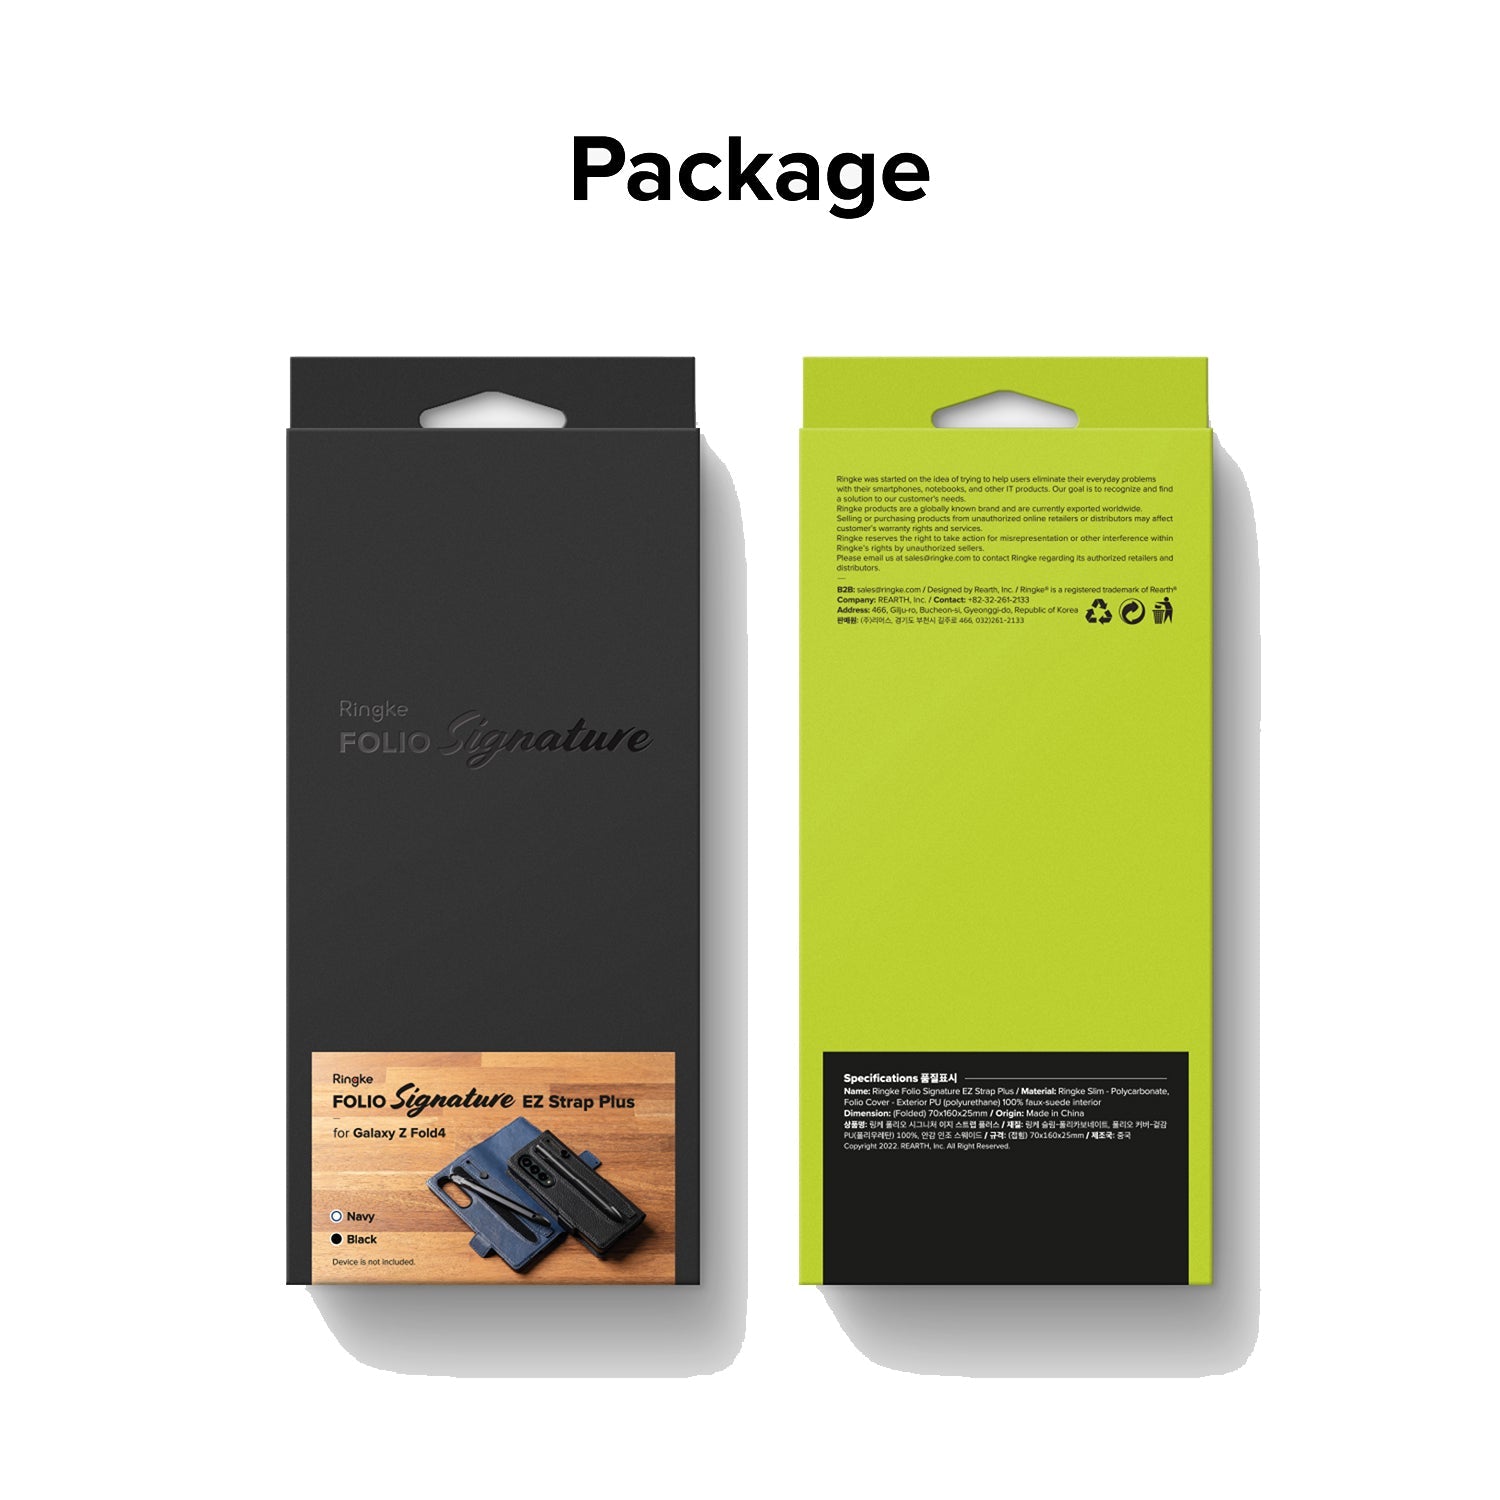 Ringke Folio Signature EZ Strap Plus Case for Samsung Galaxy Z Fold 4 Ringke 